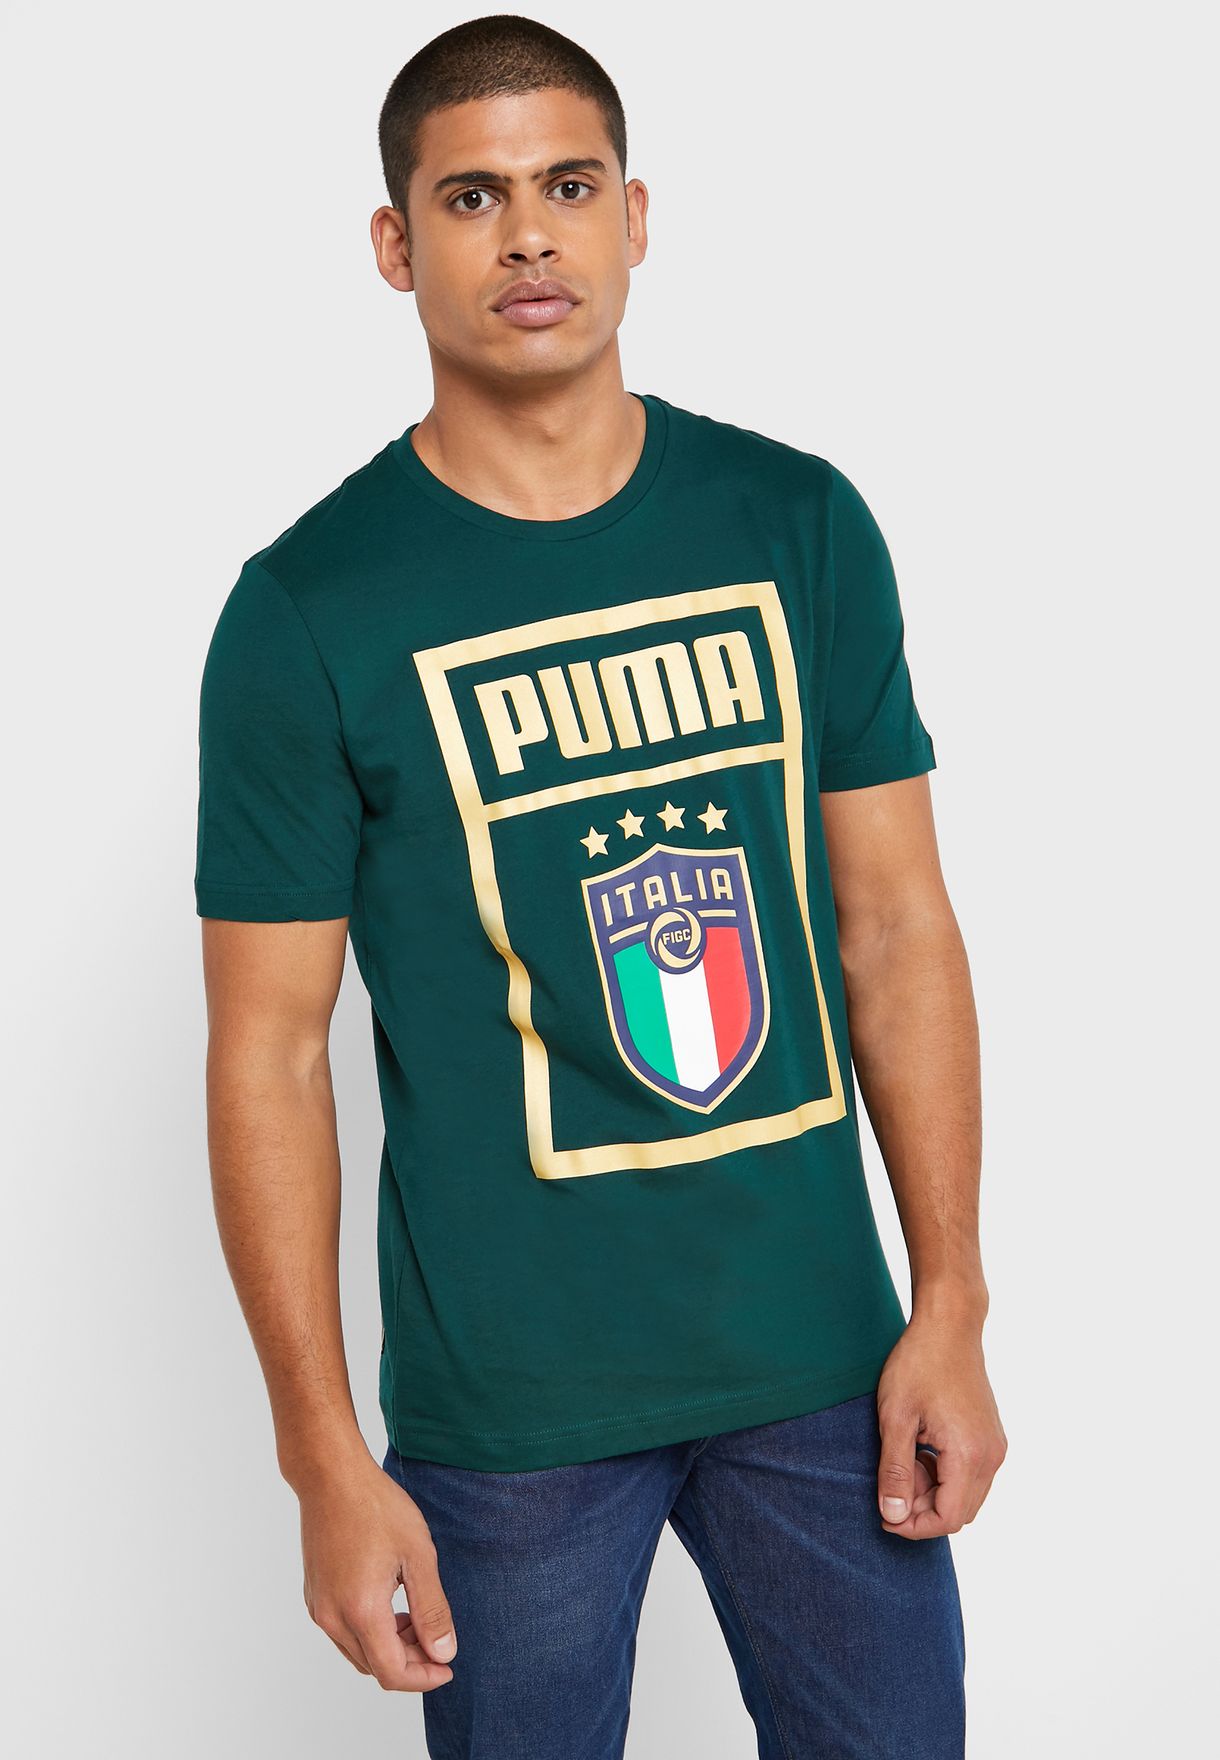 puma t shirt italia